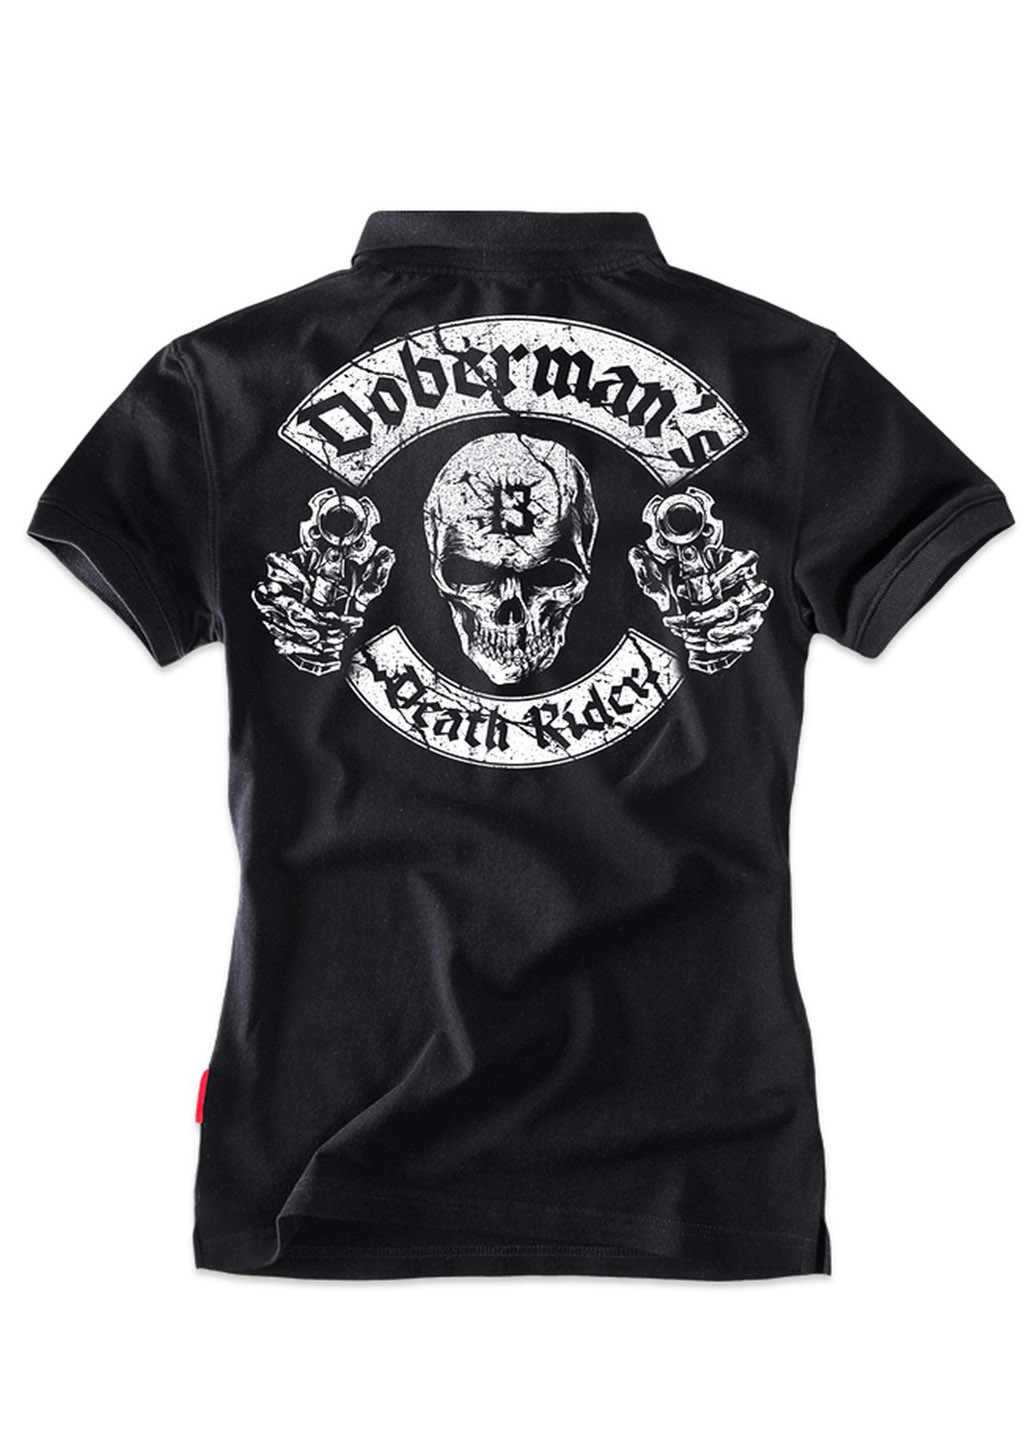 Черная женская футболка-футболка поло dobermans death rider colt tspd141bk Dobermans Aggressive